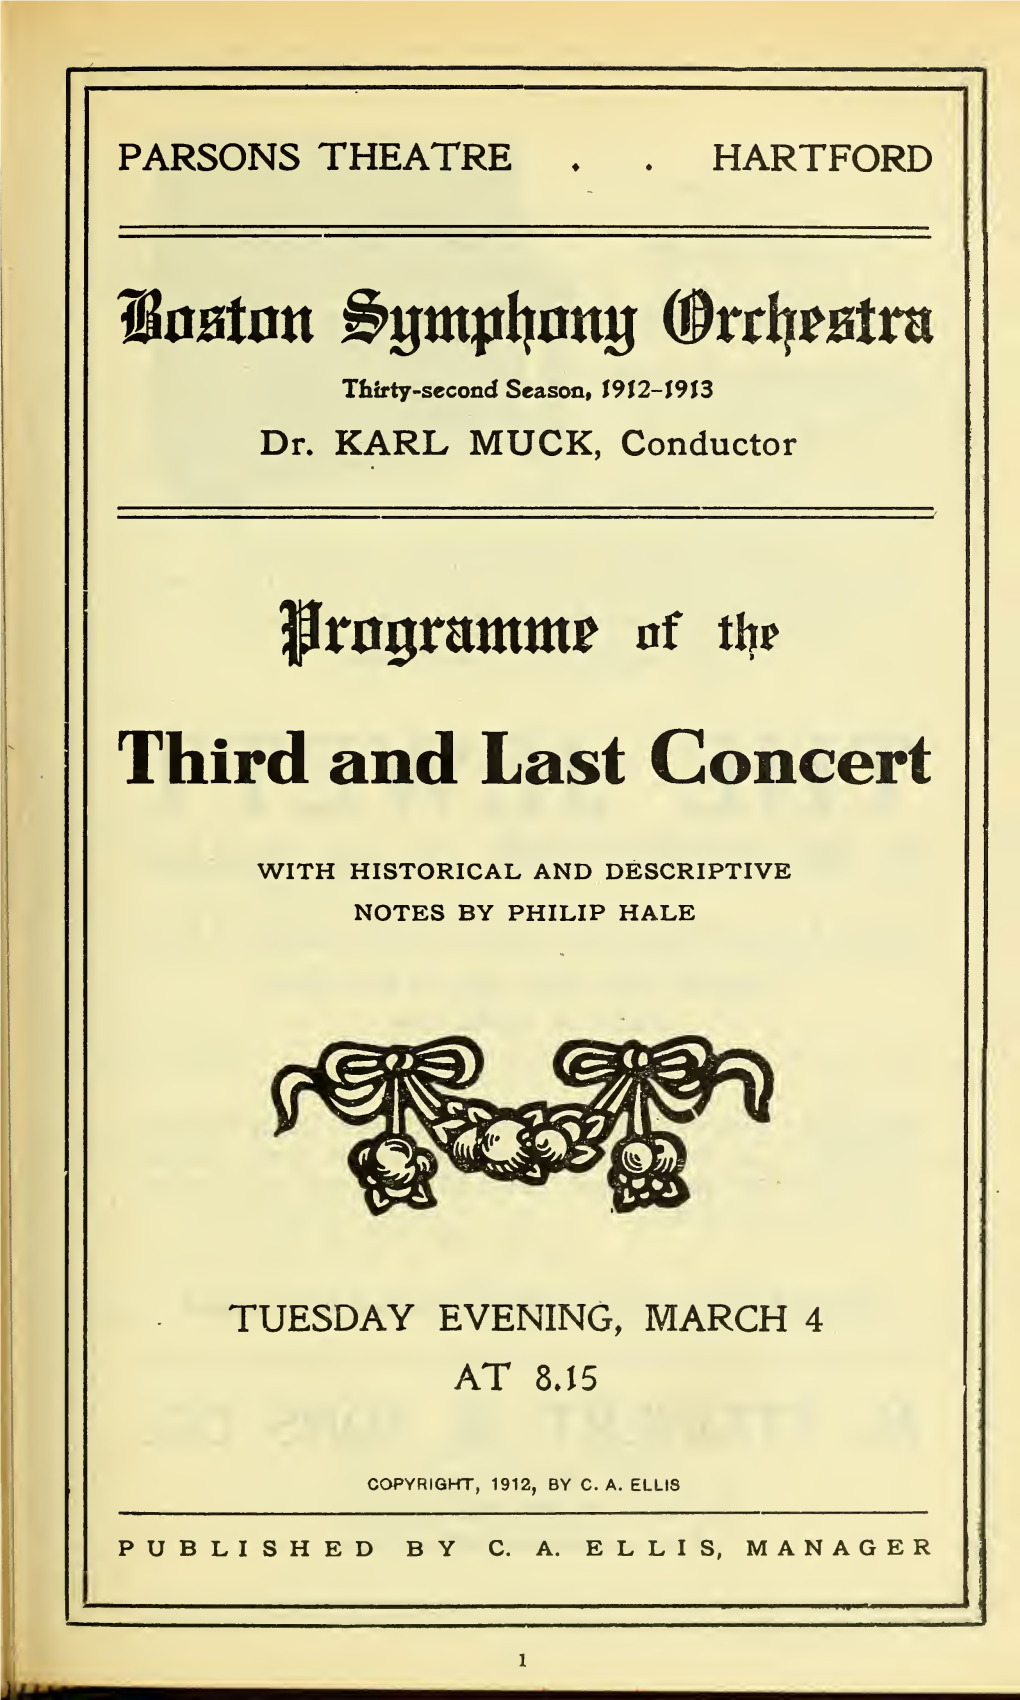 Boston Symphony Orchestra Concert Programs, Season 32,1912-1913, Trip